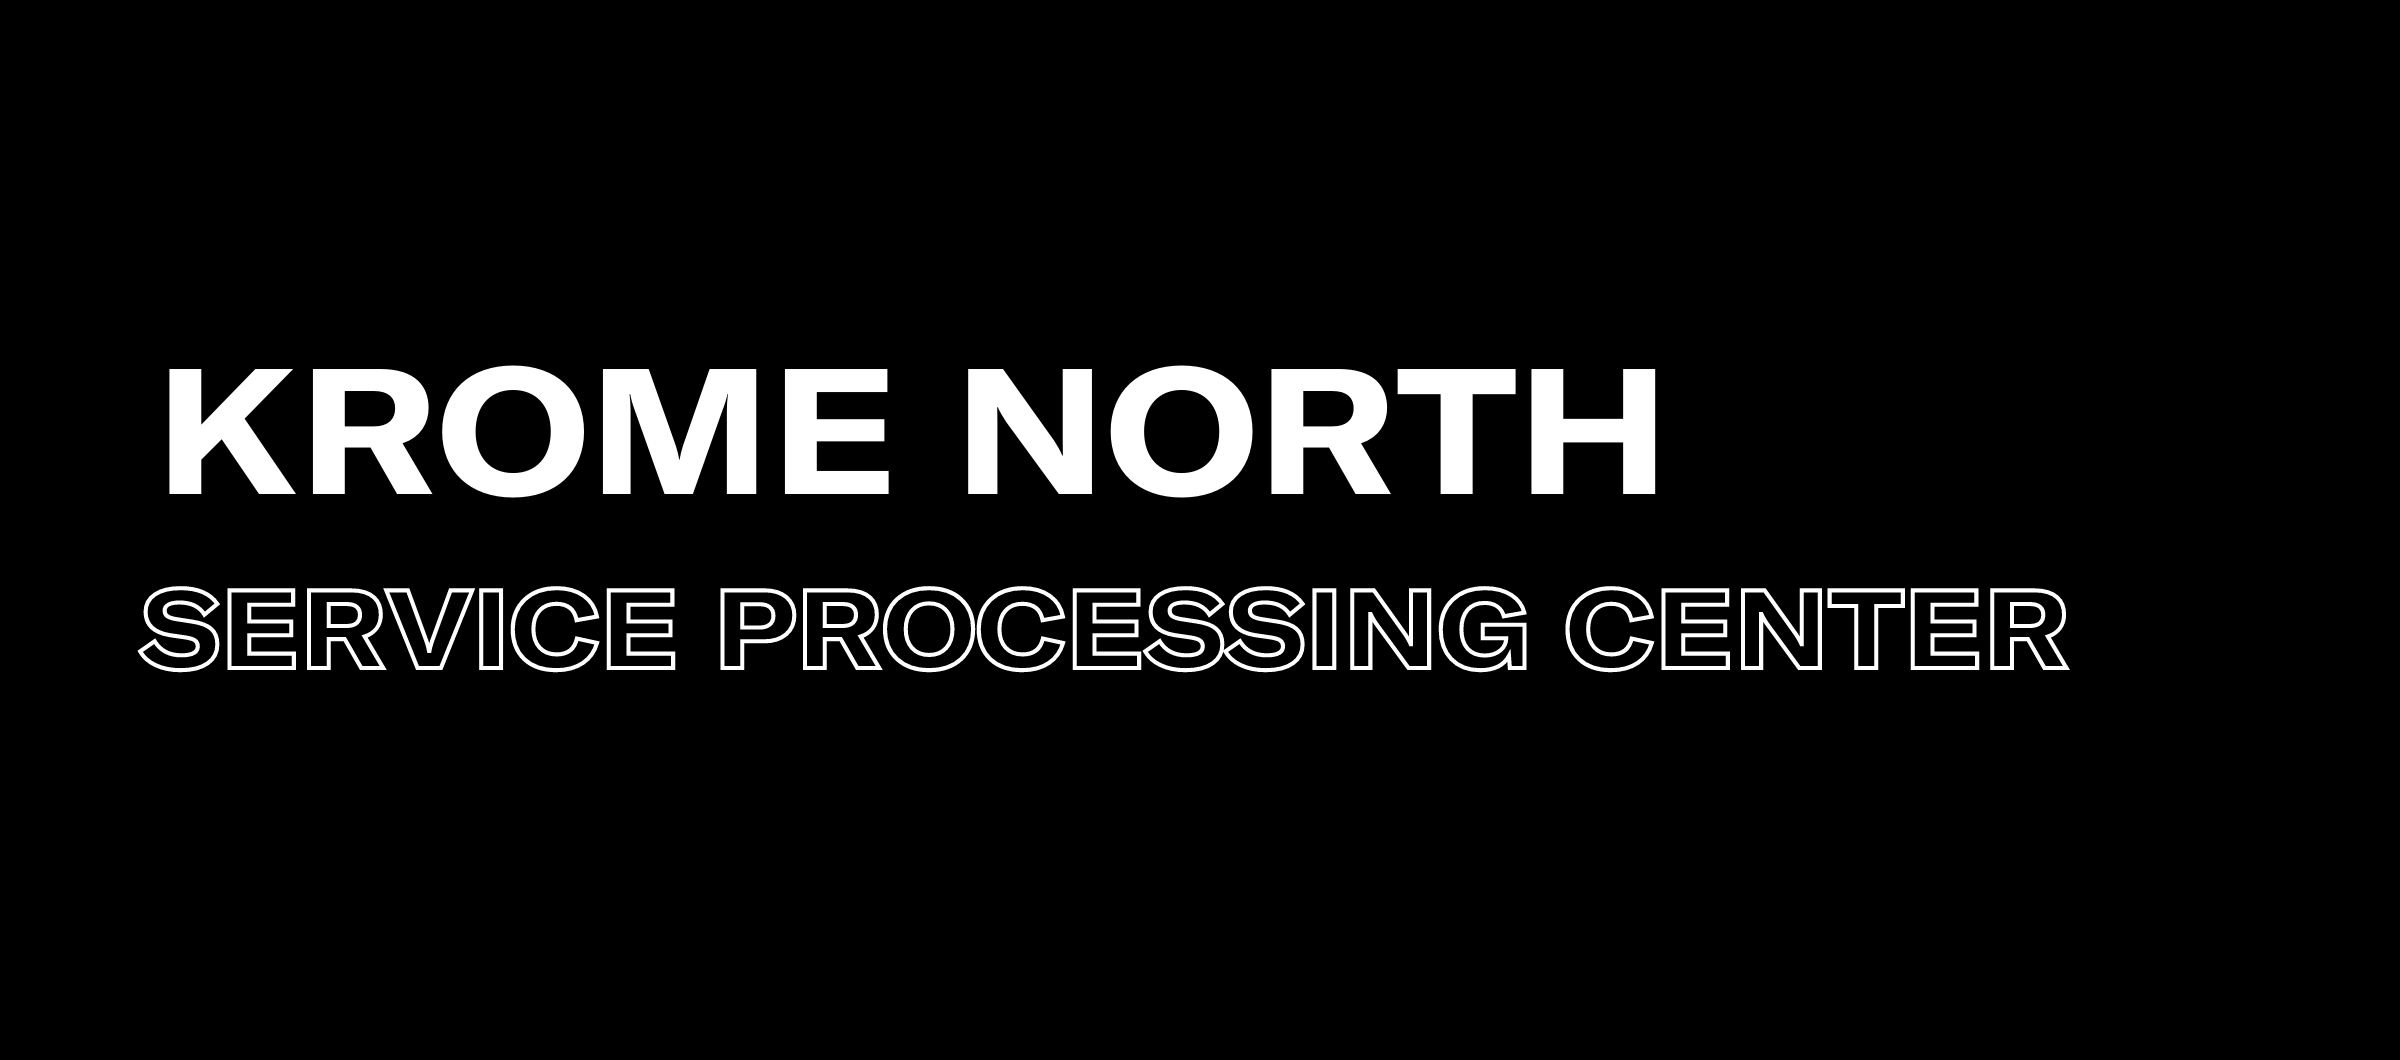 Krome North Service Processing Center 